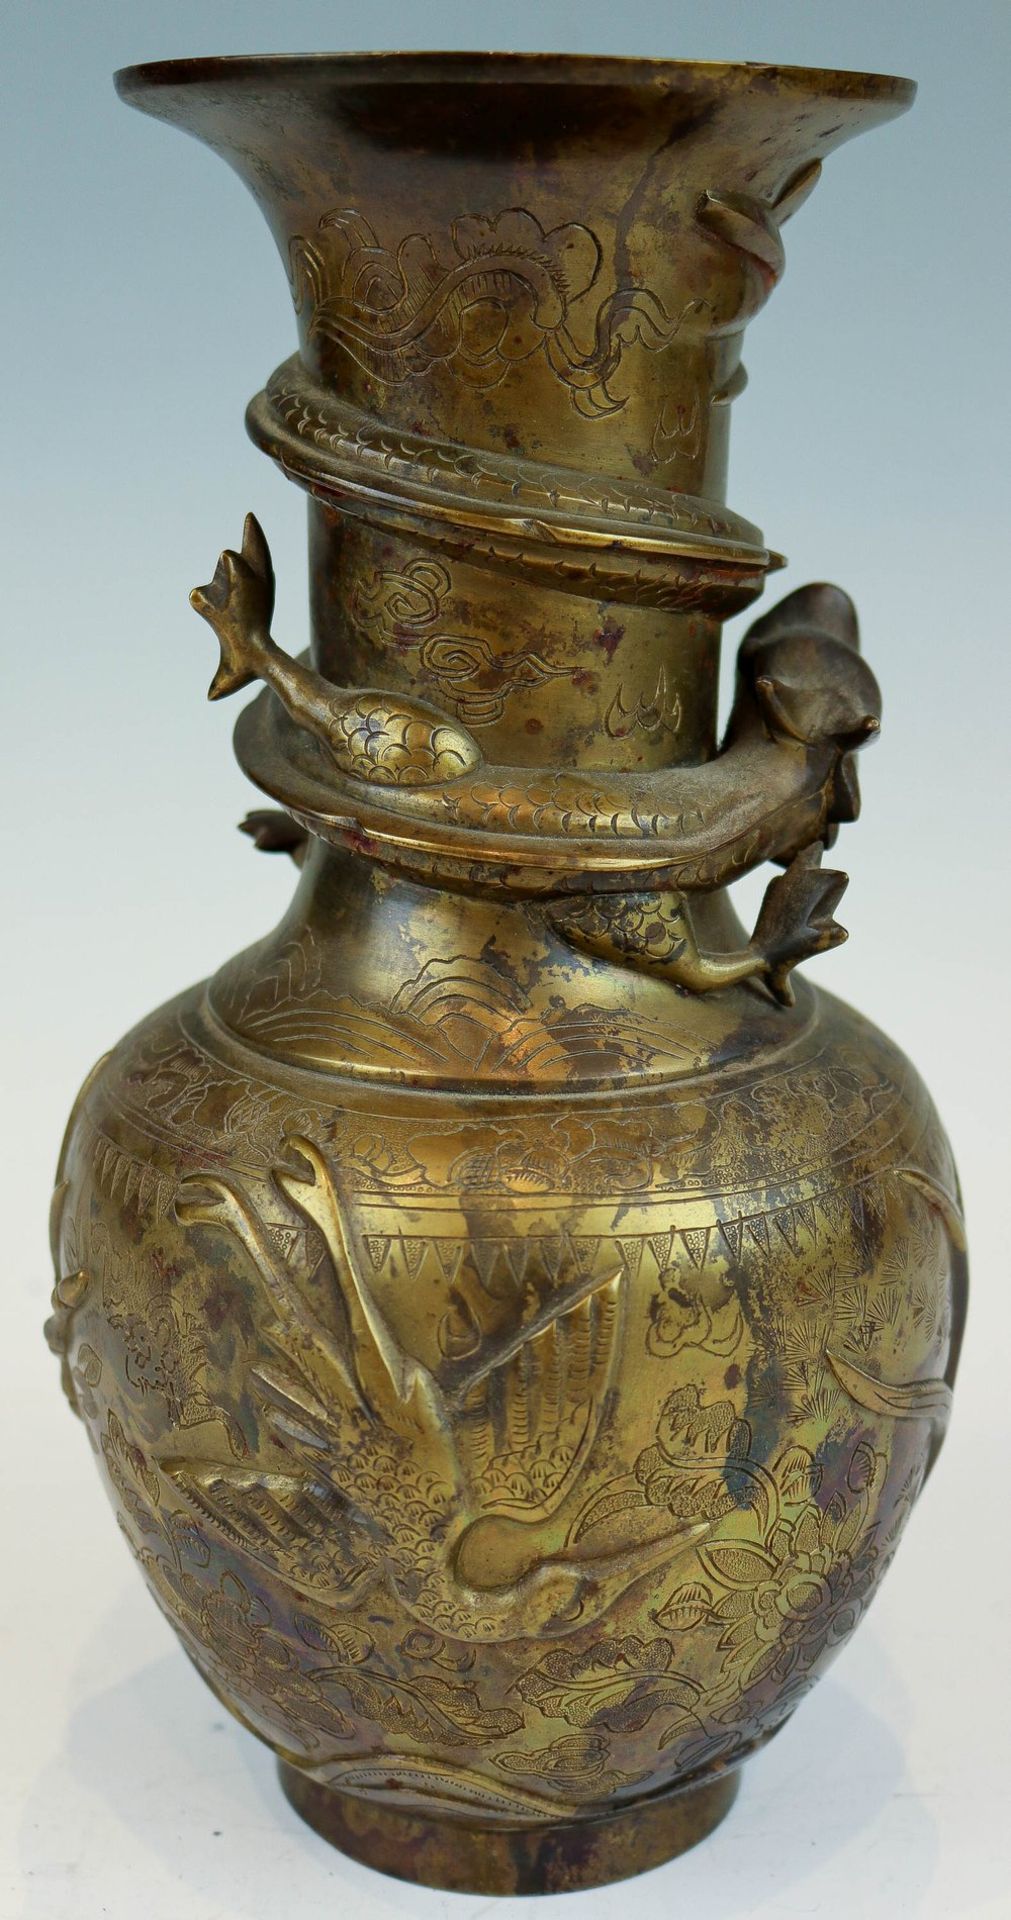 Gebauchte Vase China, 19. Jh. - Image 2 of 4